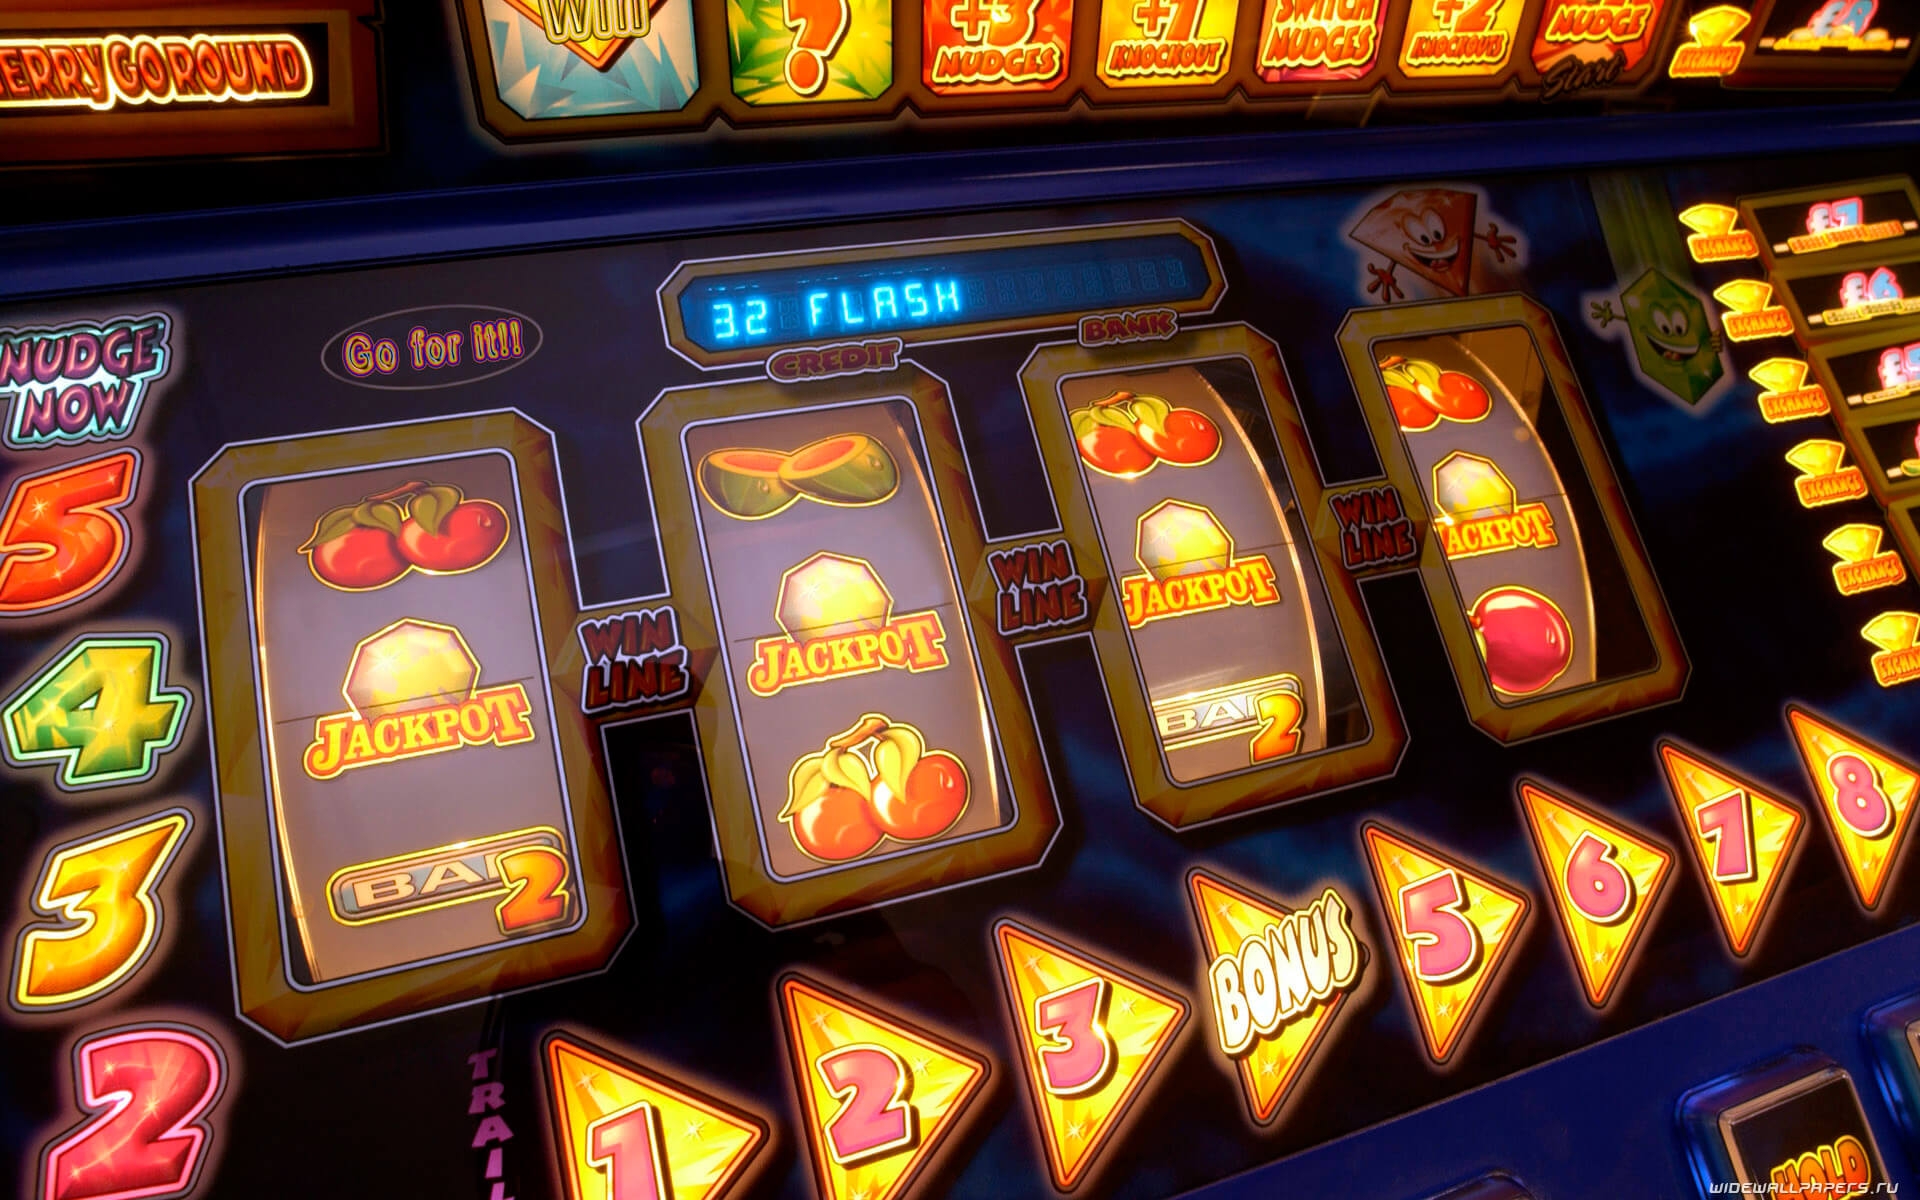 Win Big How To Use Phone Credit To Play Slots Gambling